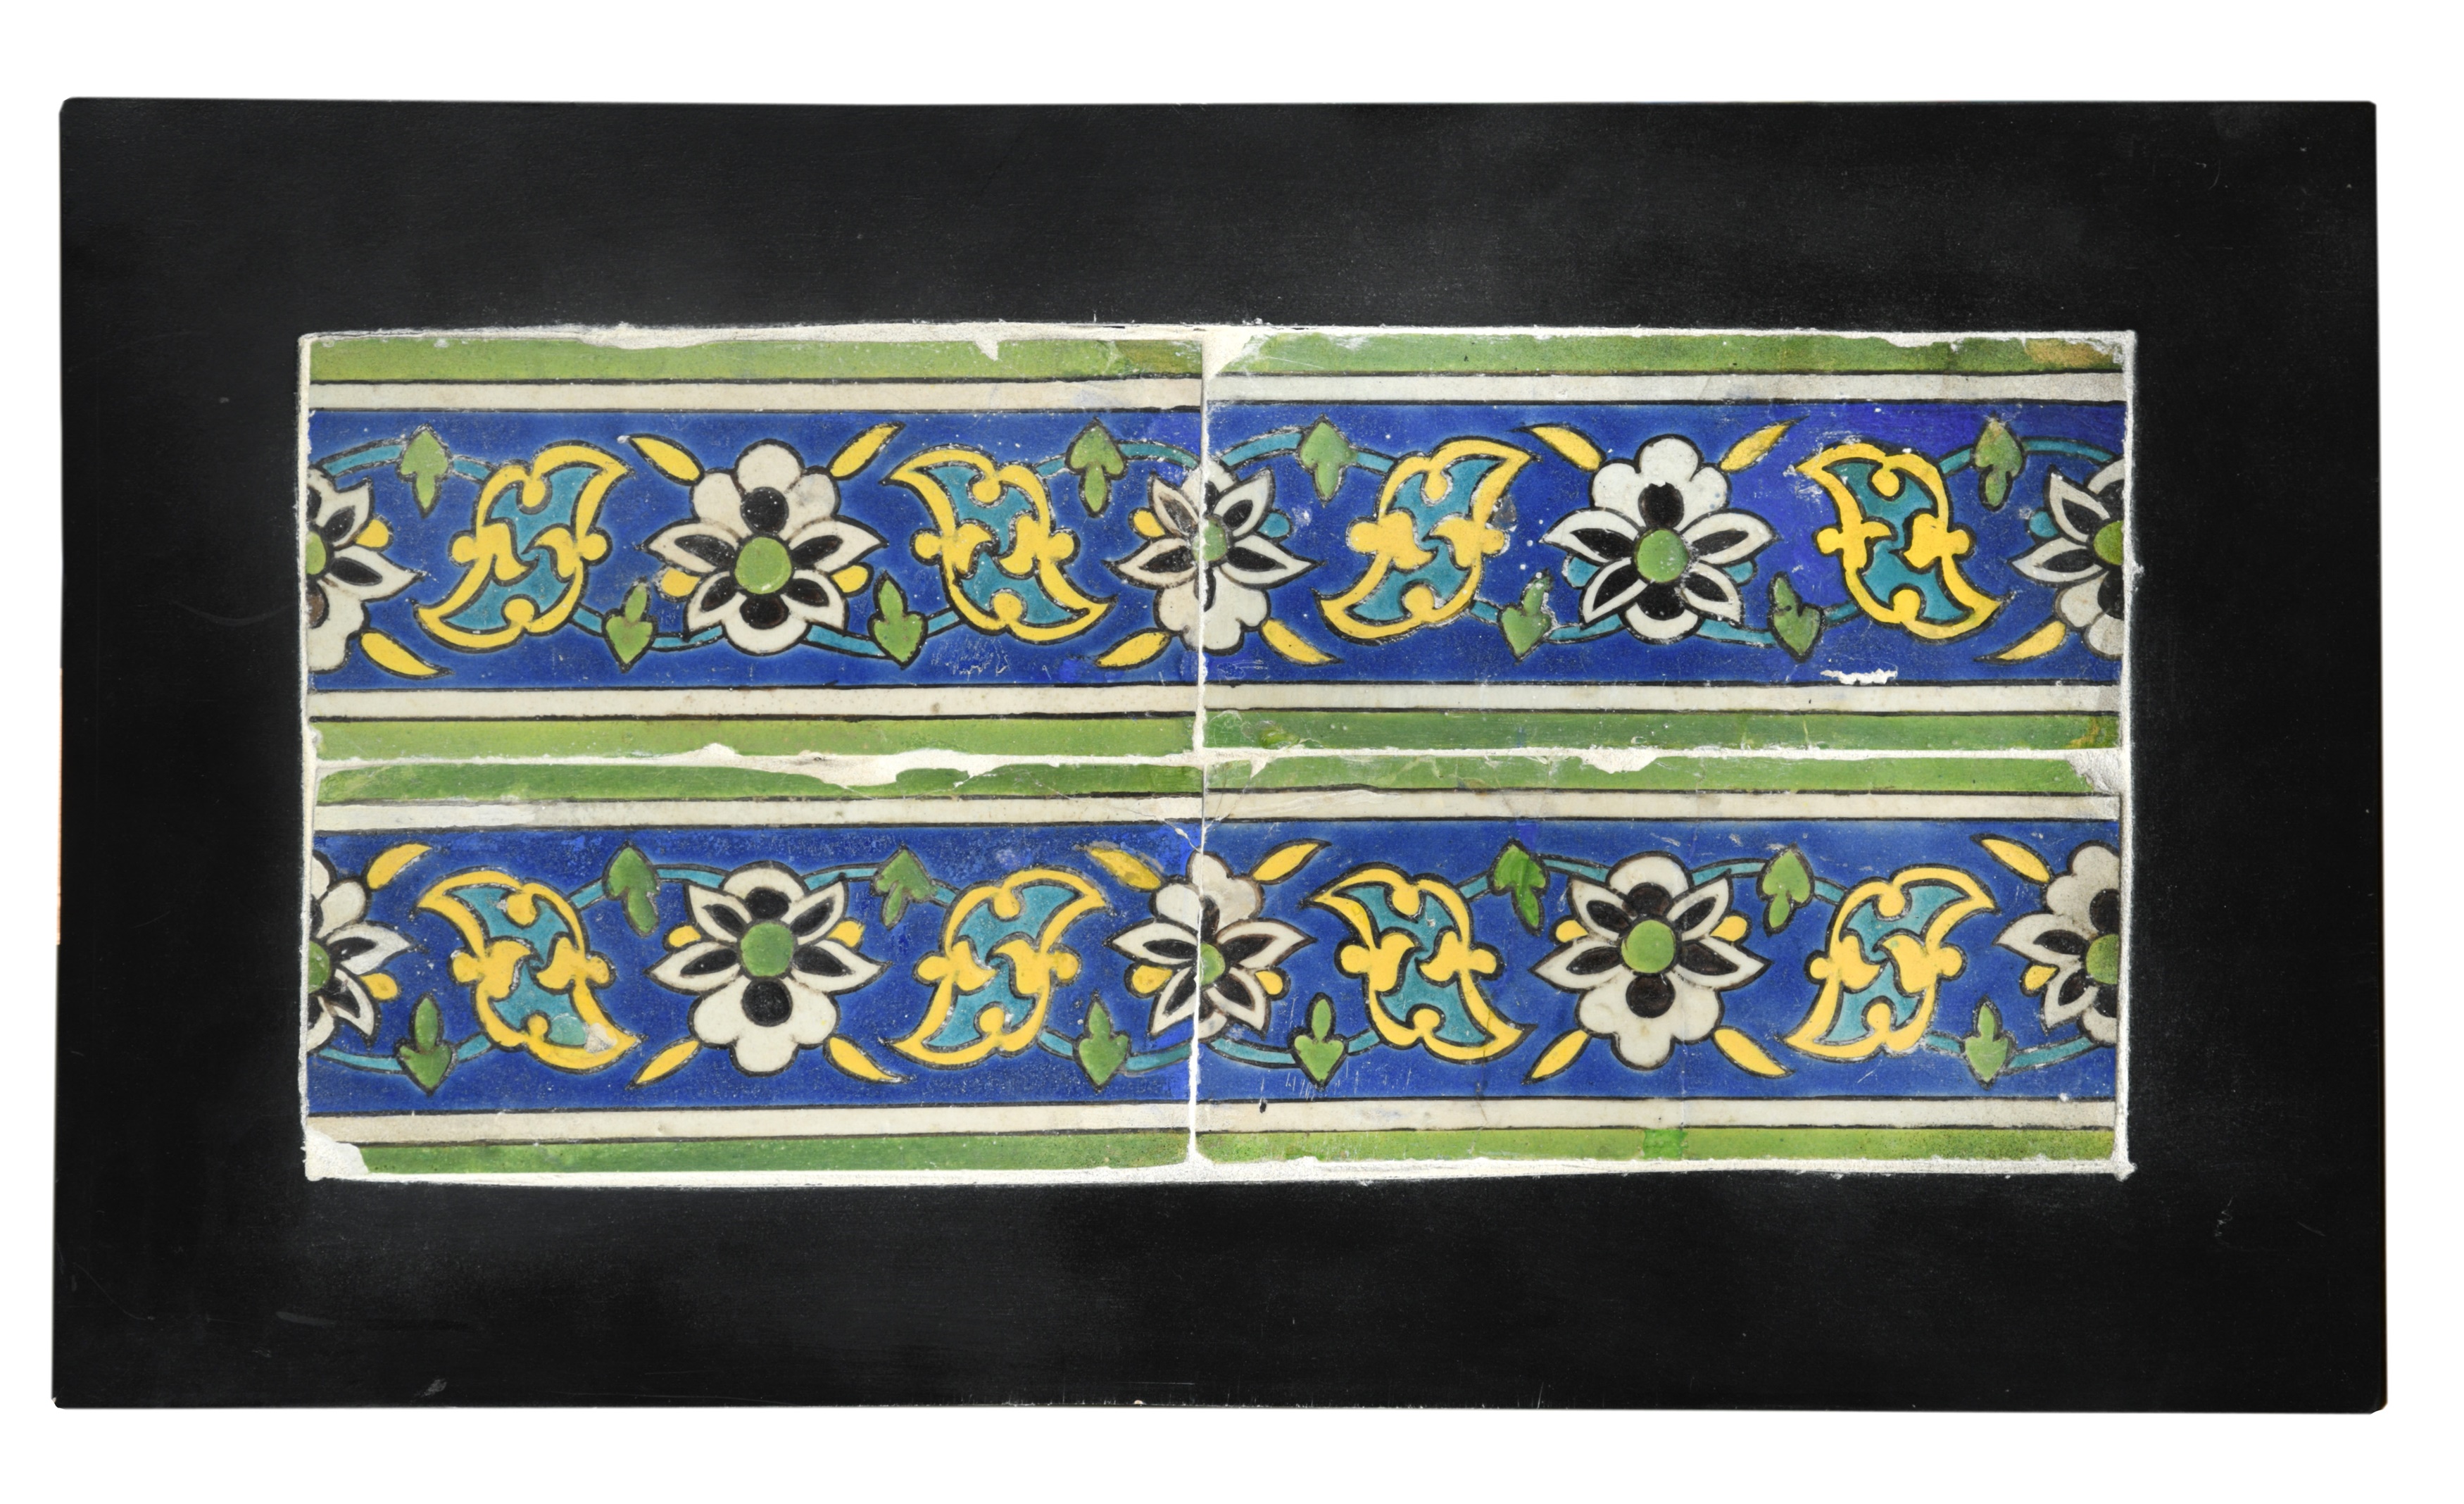 A 17th century Persian Safavid border tiles panel,